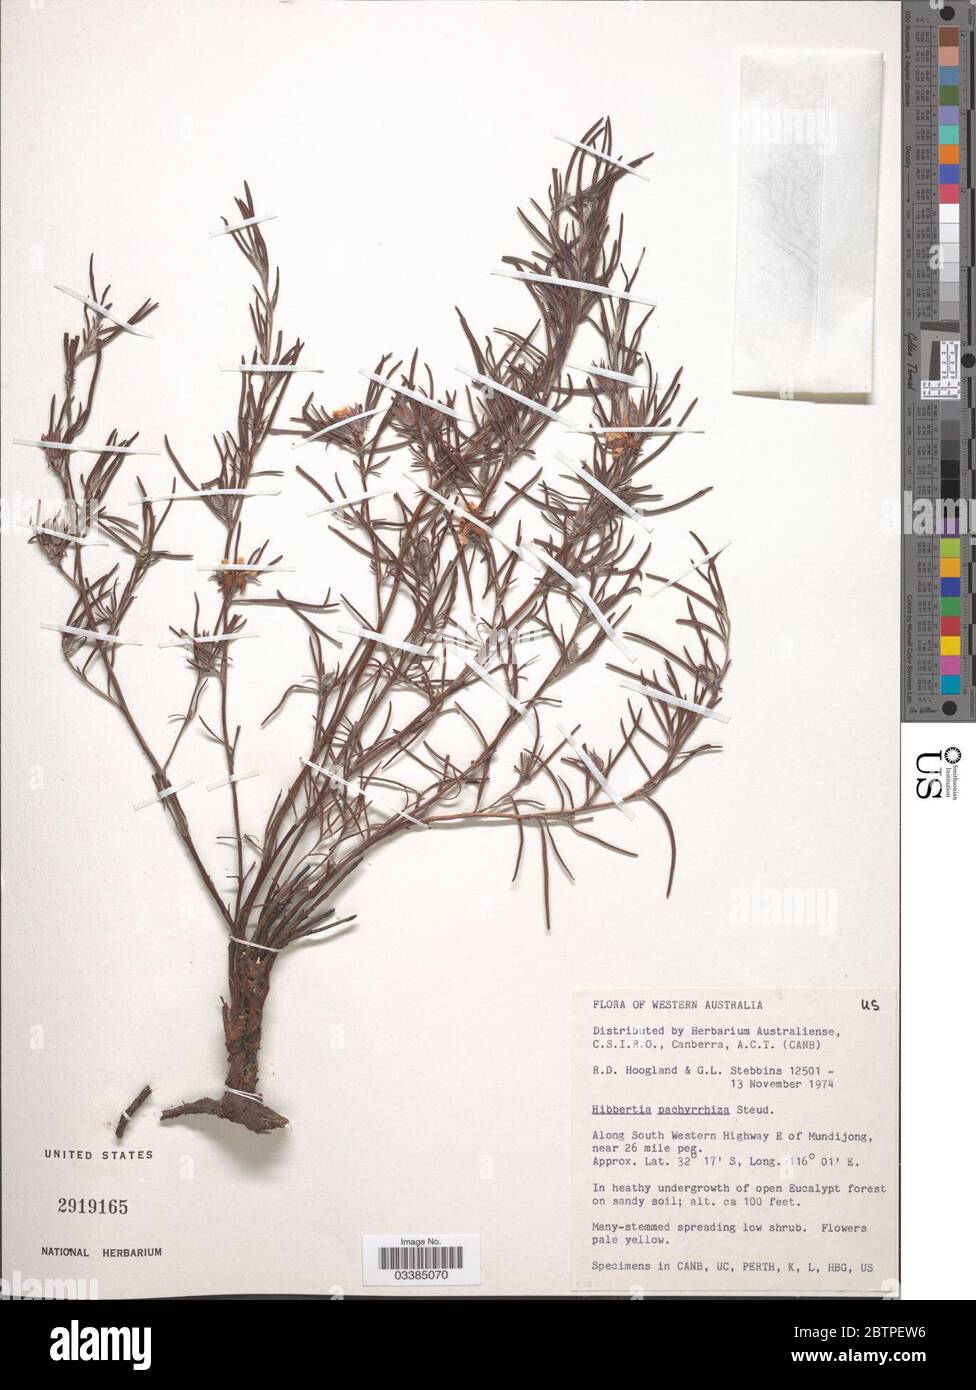 Hibbertia pachyrrhiza Steud. Stock Photo